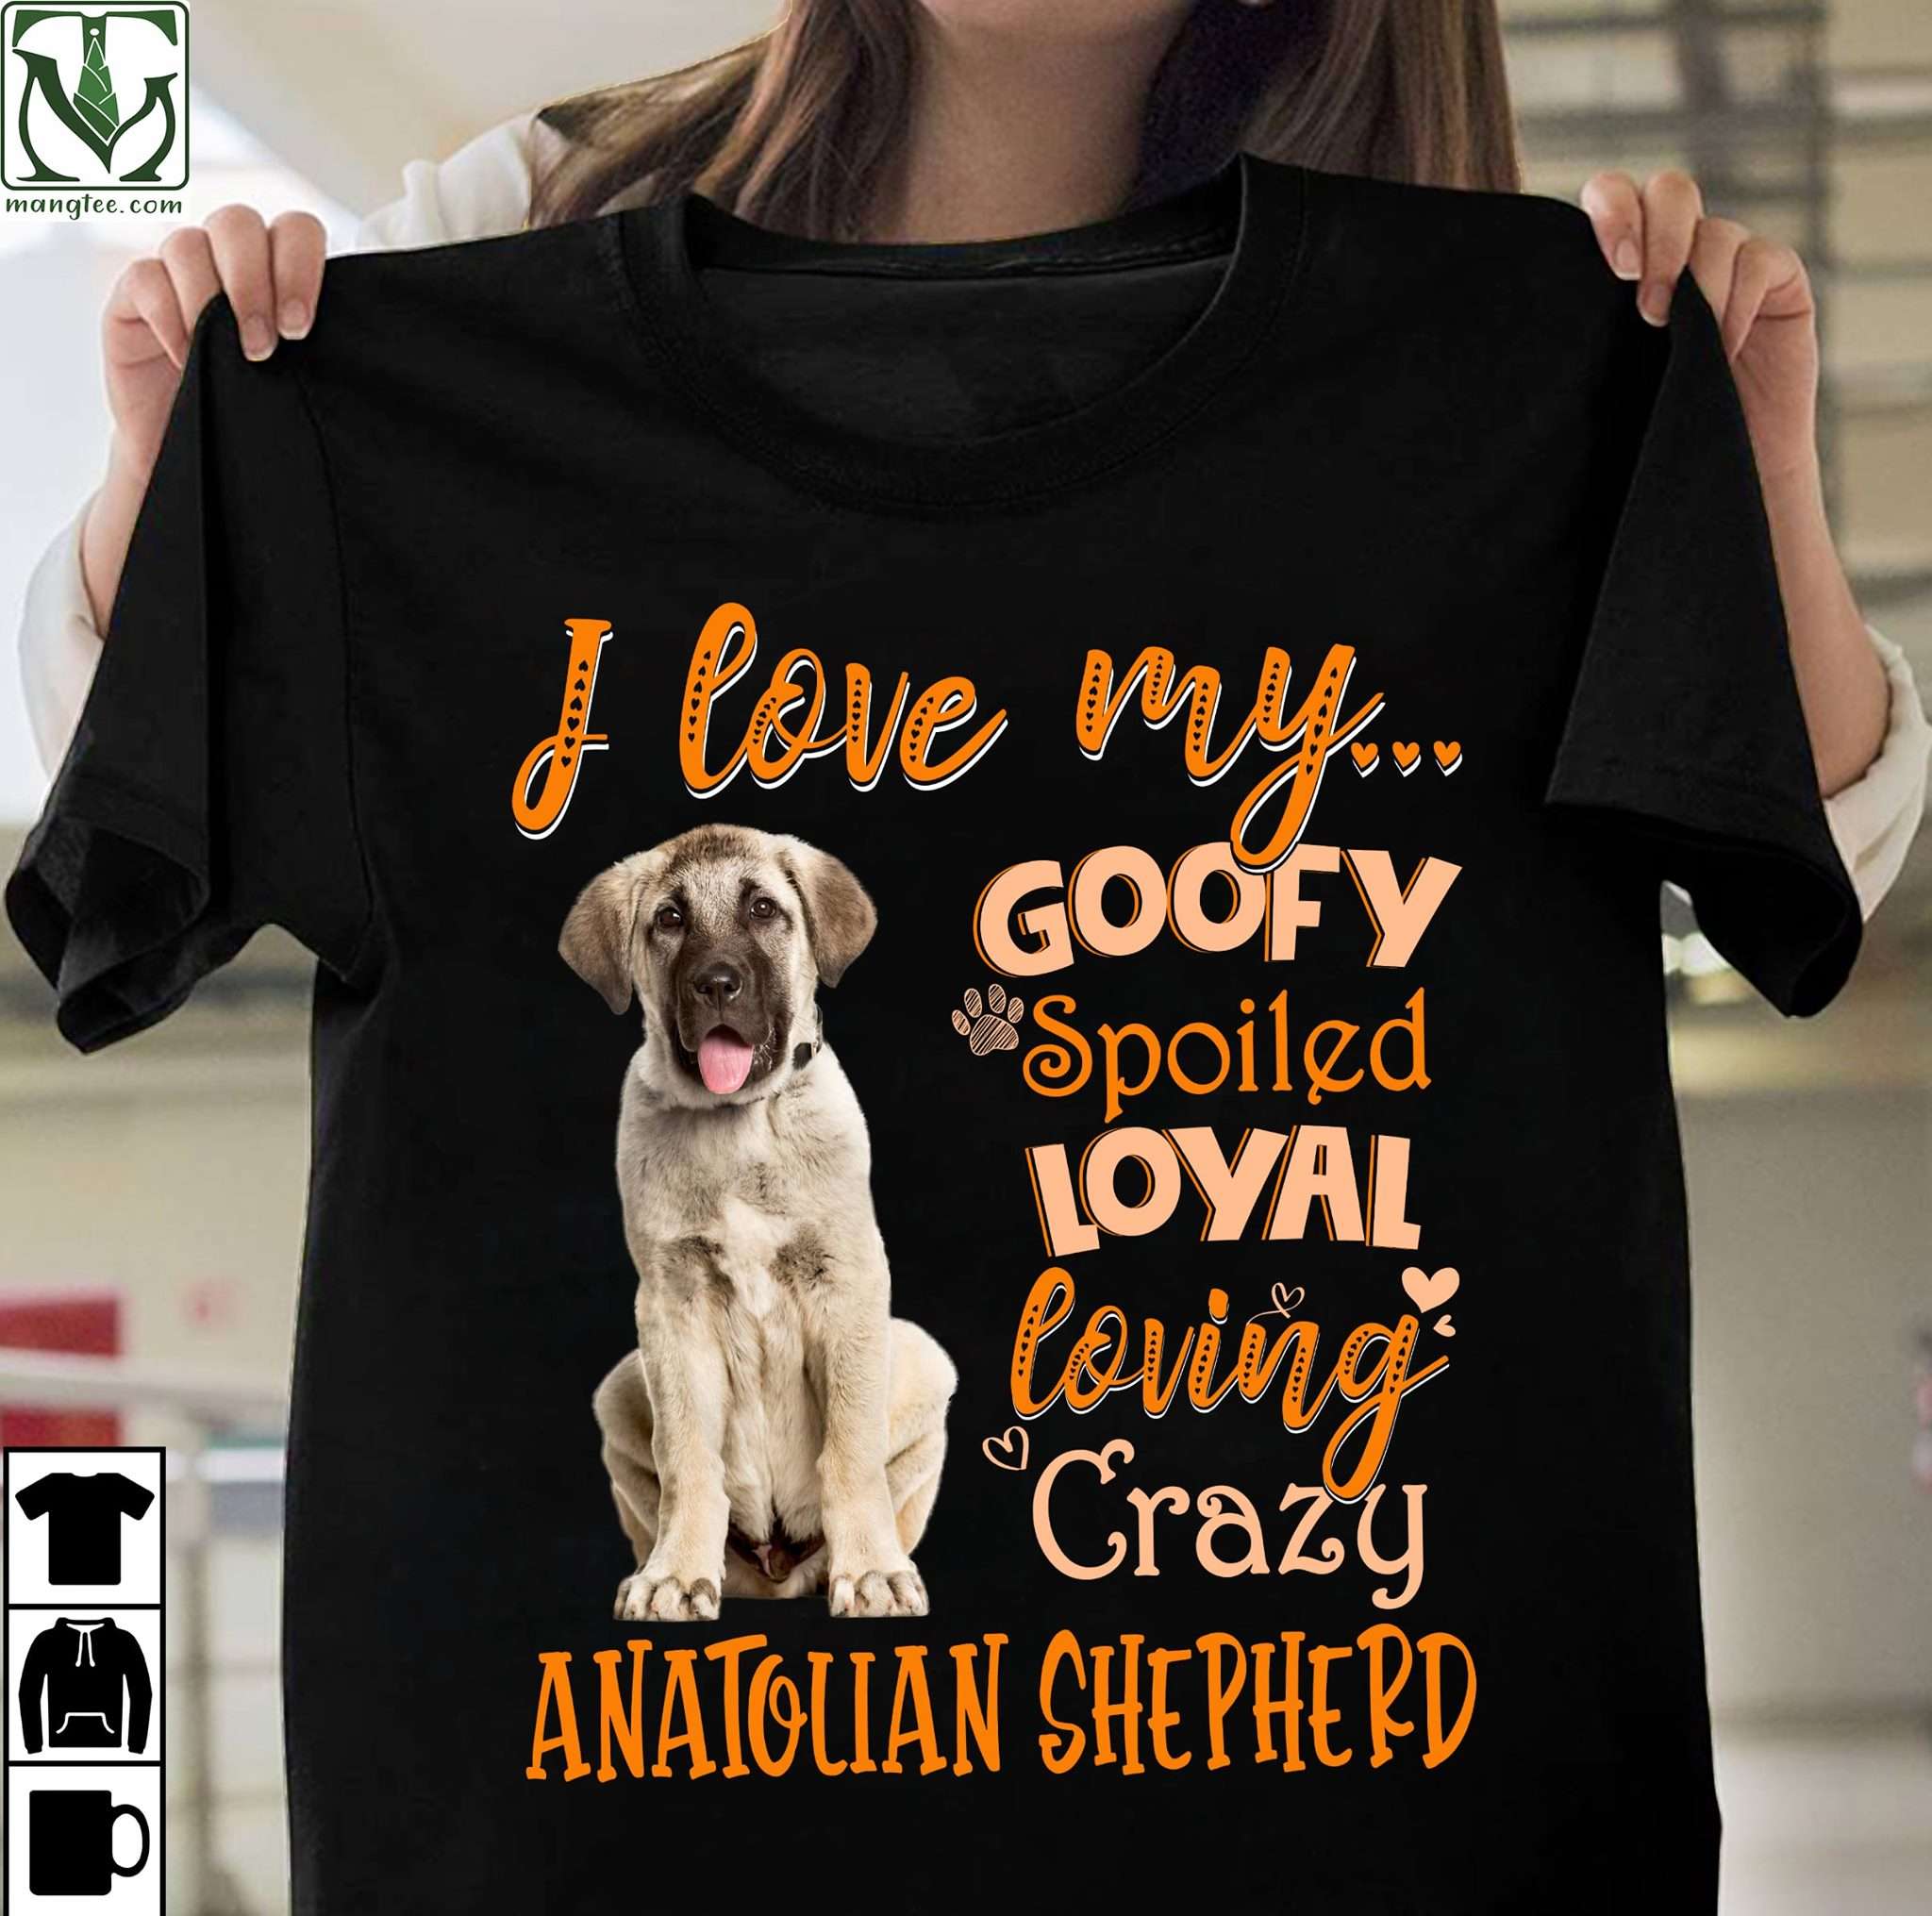 I love my goofy spoiled loyal loving crazy Anatolian Shepherd - Dog lover